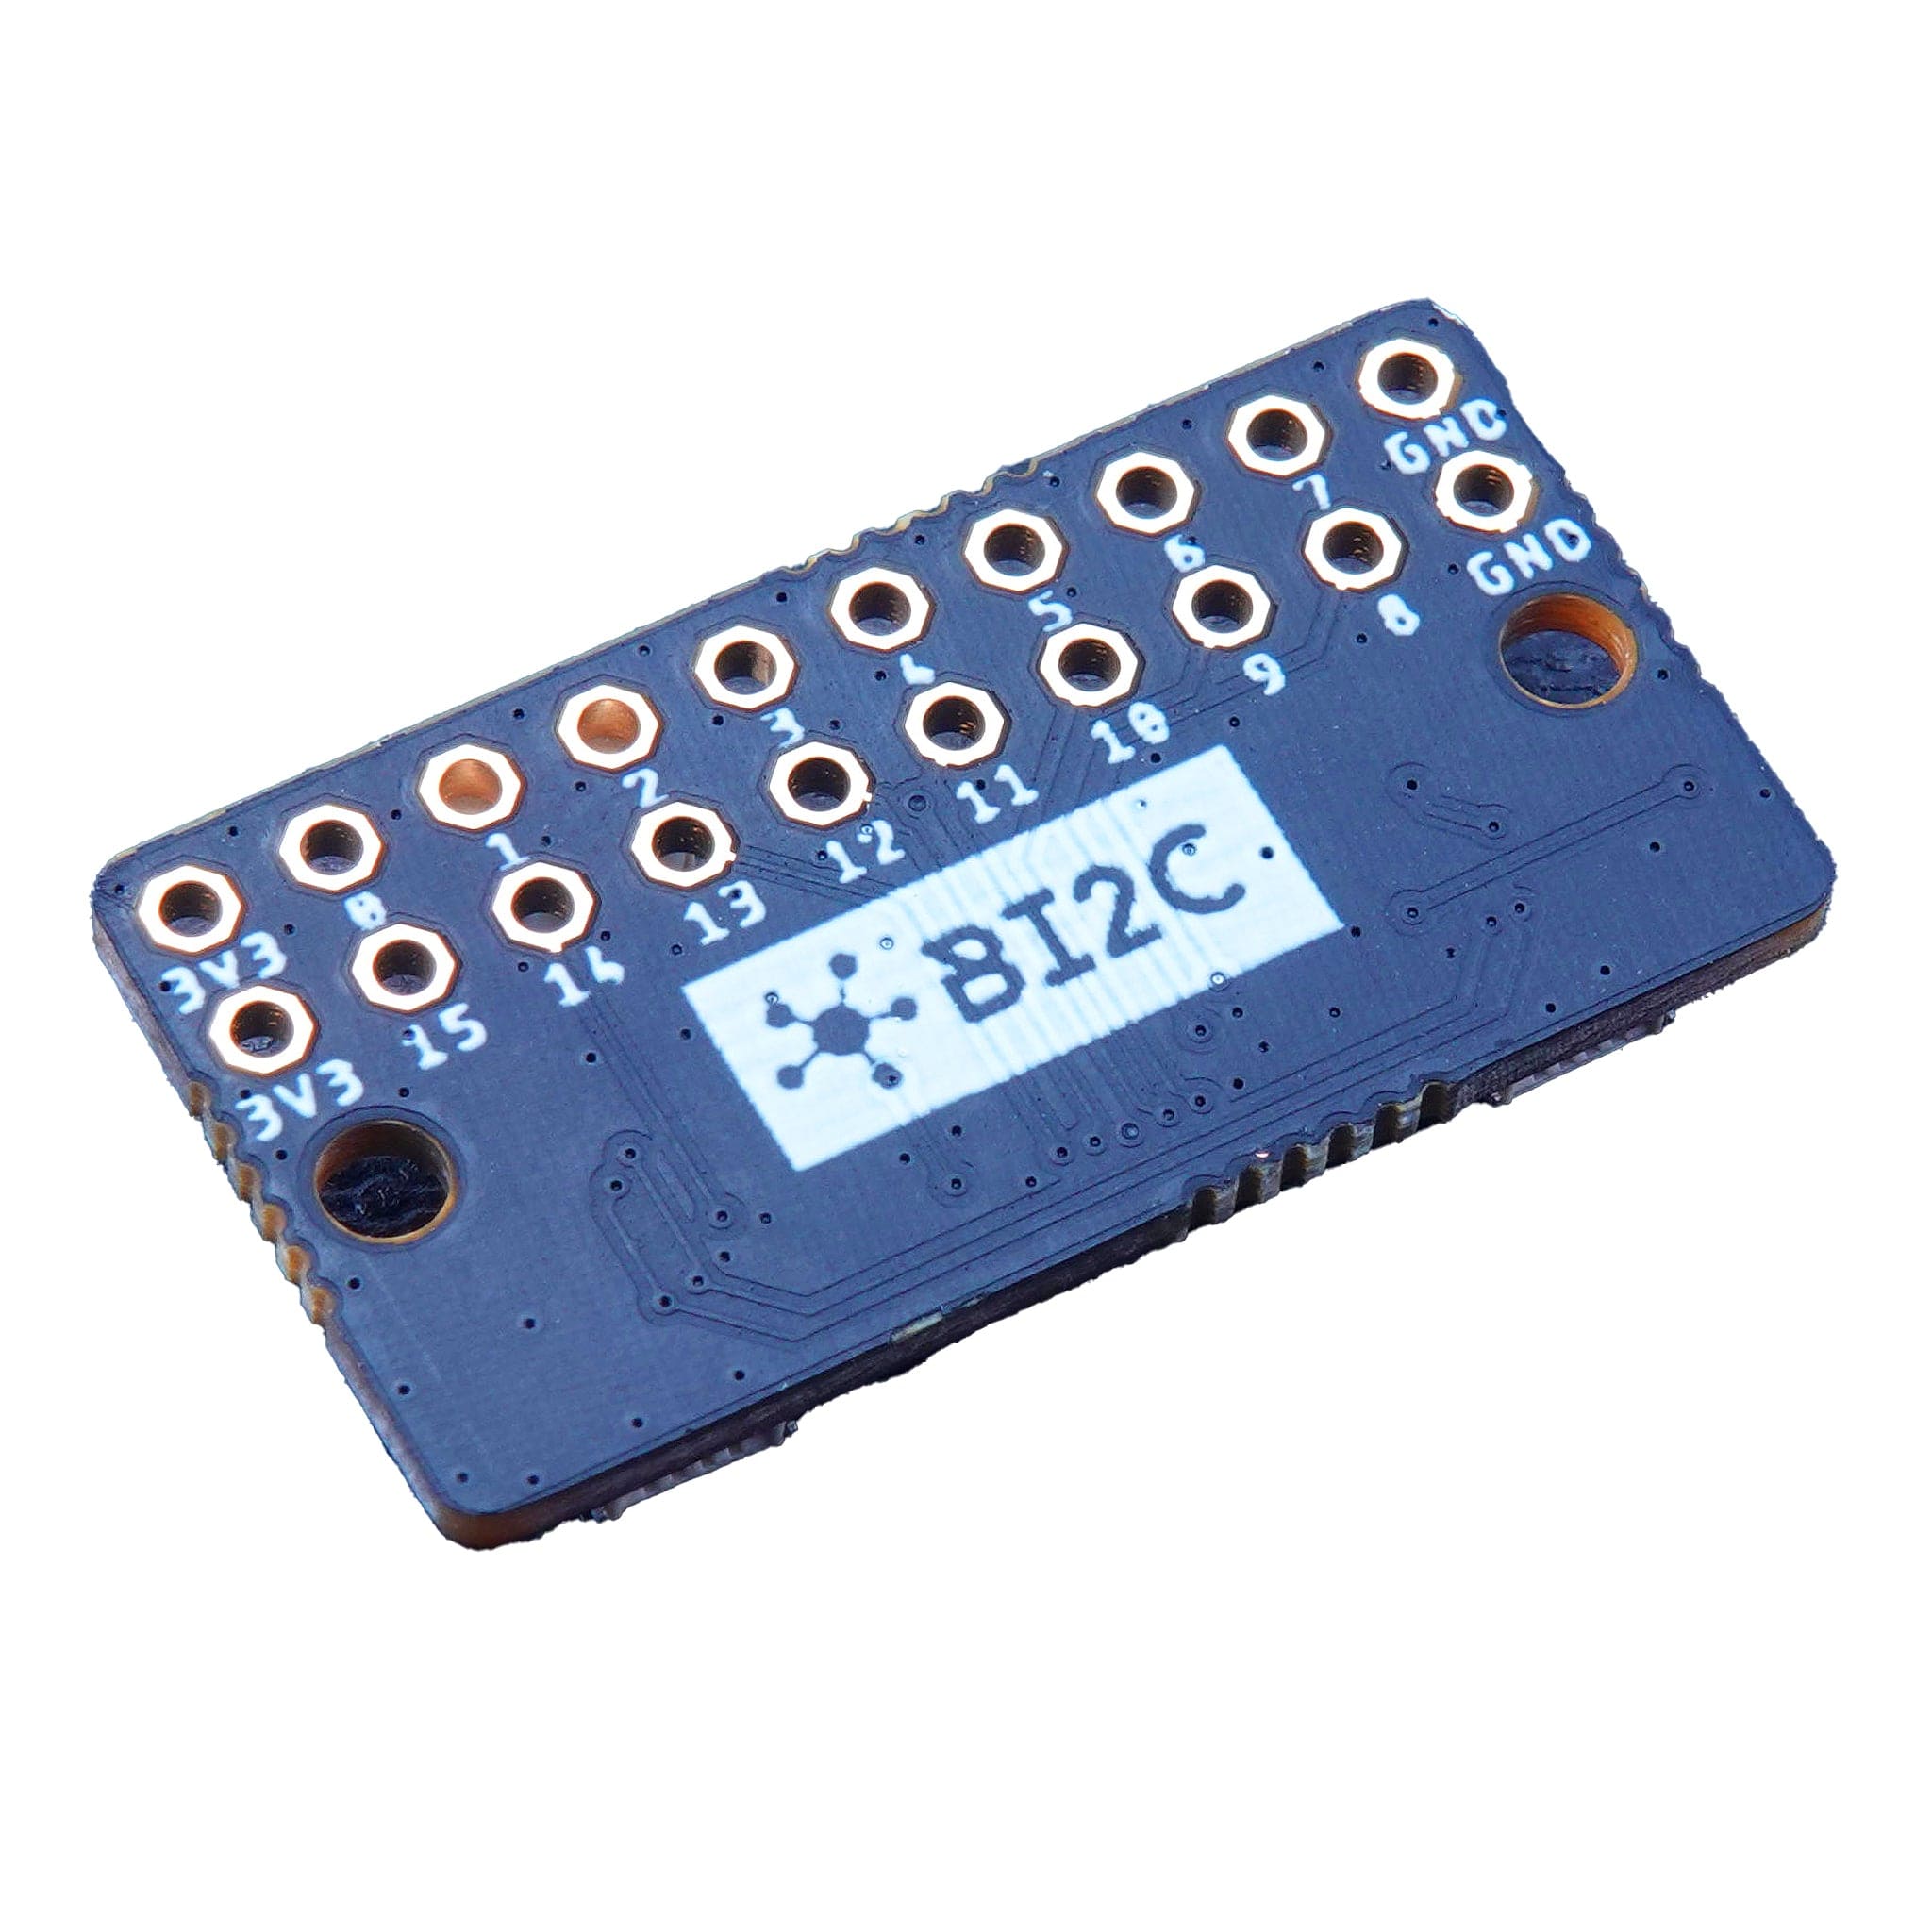 Bi2C – IO16 Adapter - The Pi Hut